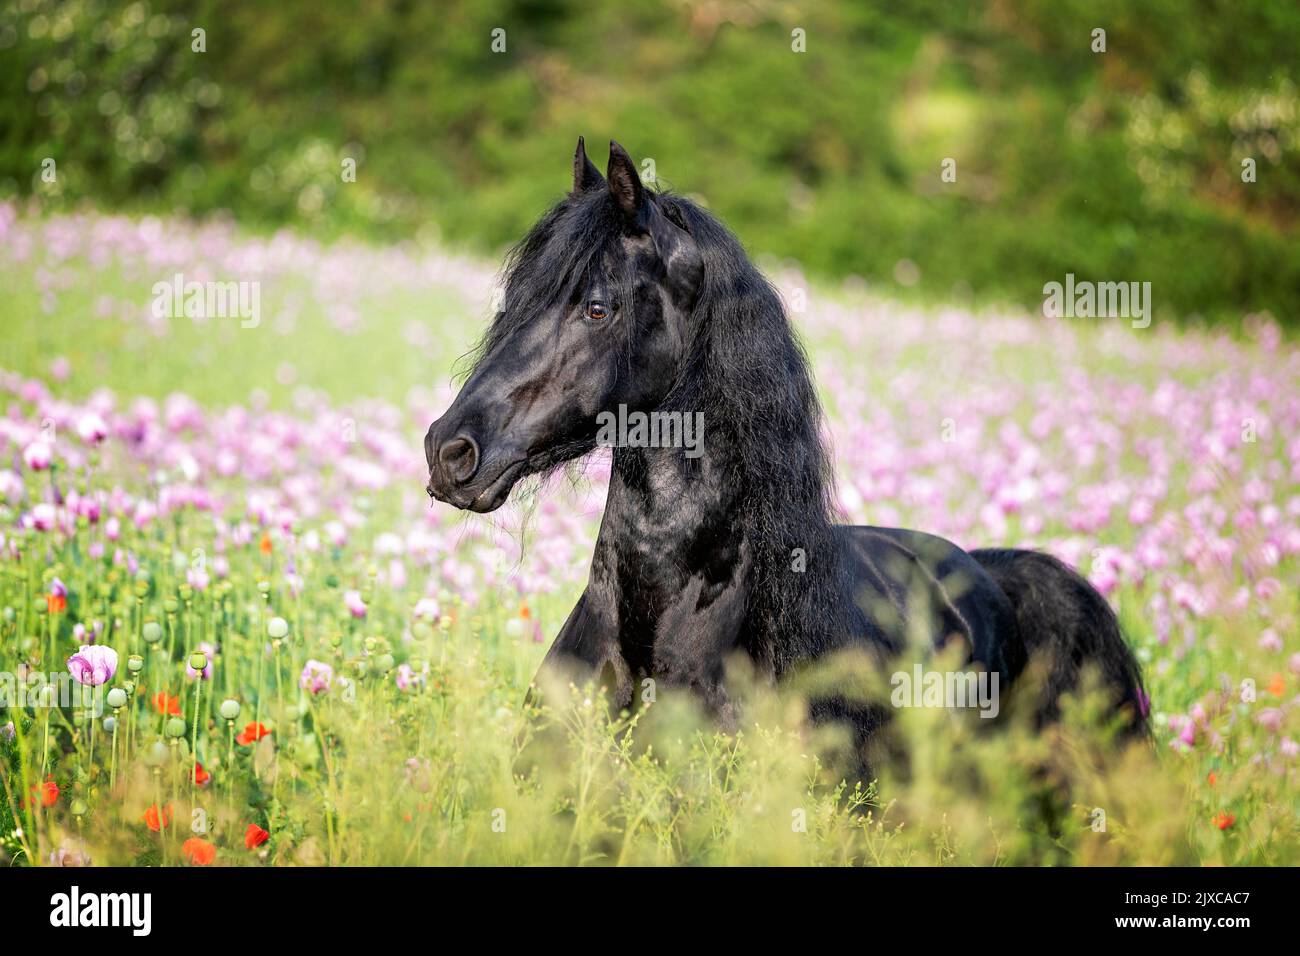 Friesian horse. Black stallion standing in flowering poppies. Germany Stock Photo